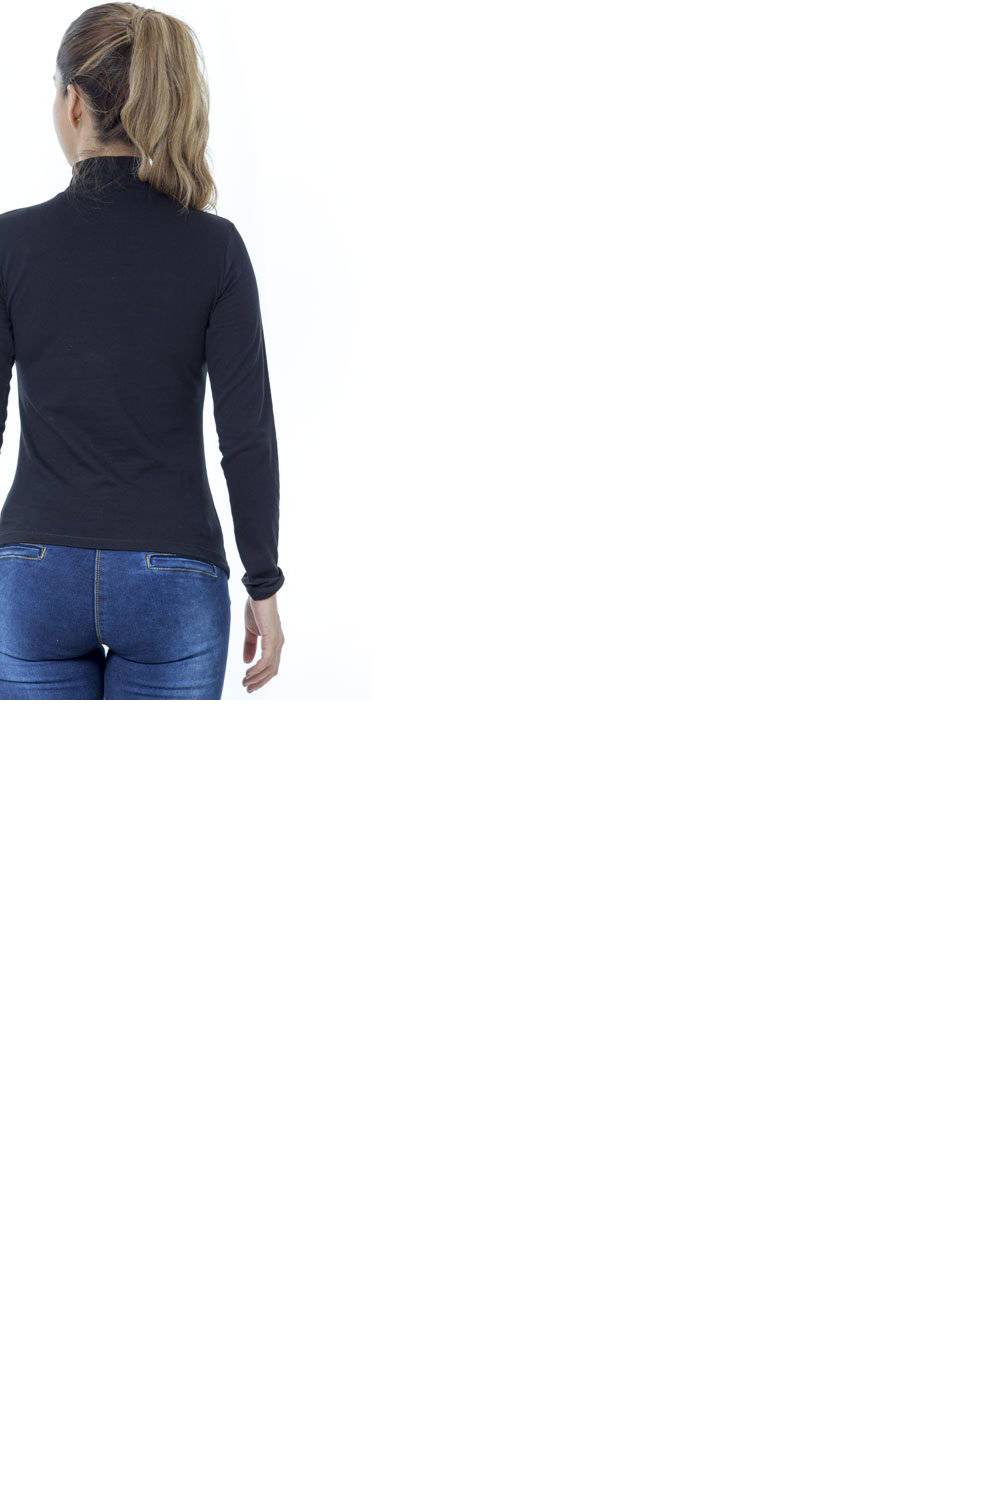 BOCARED - Sweater mujer bocared